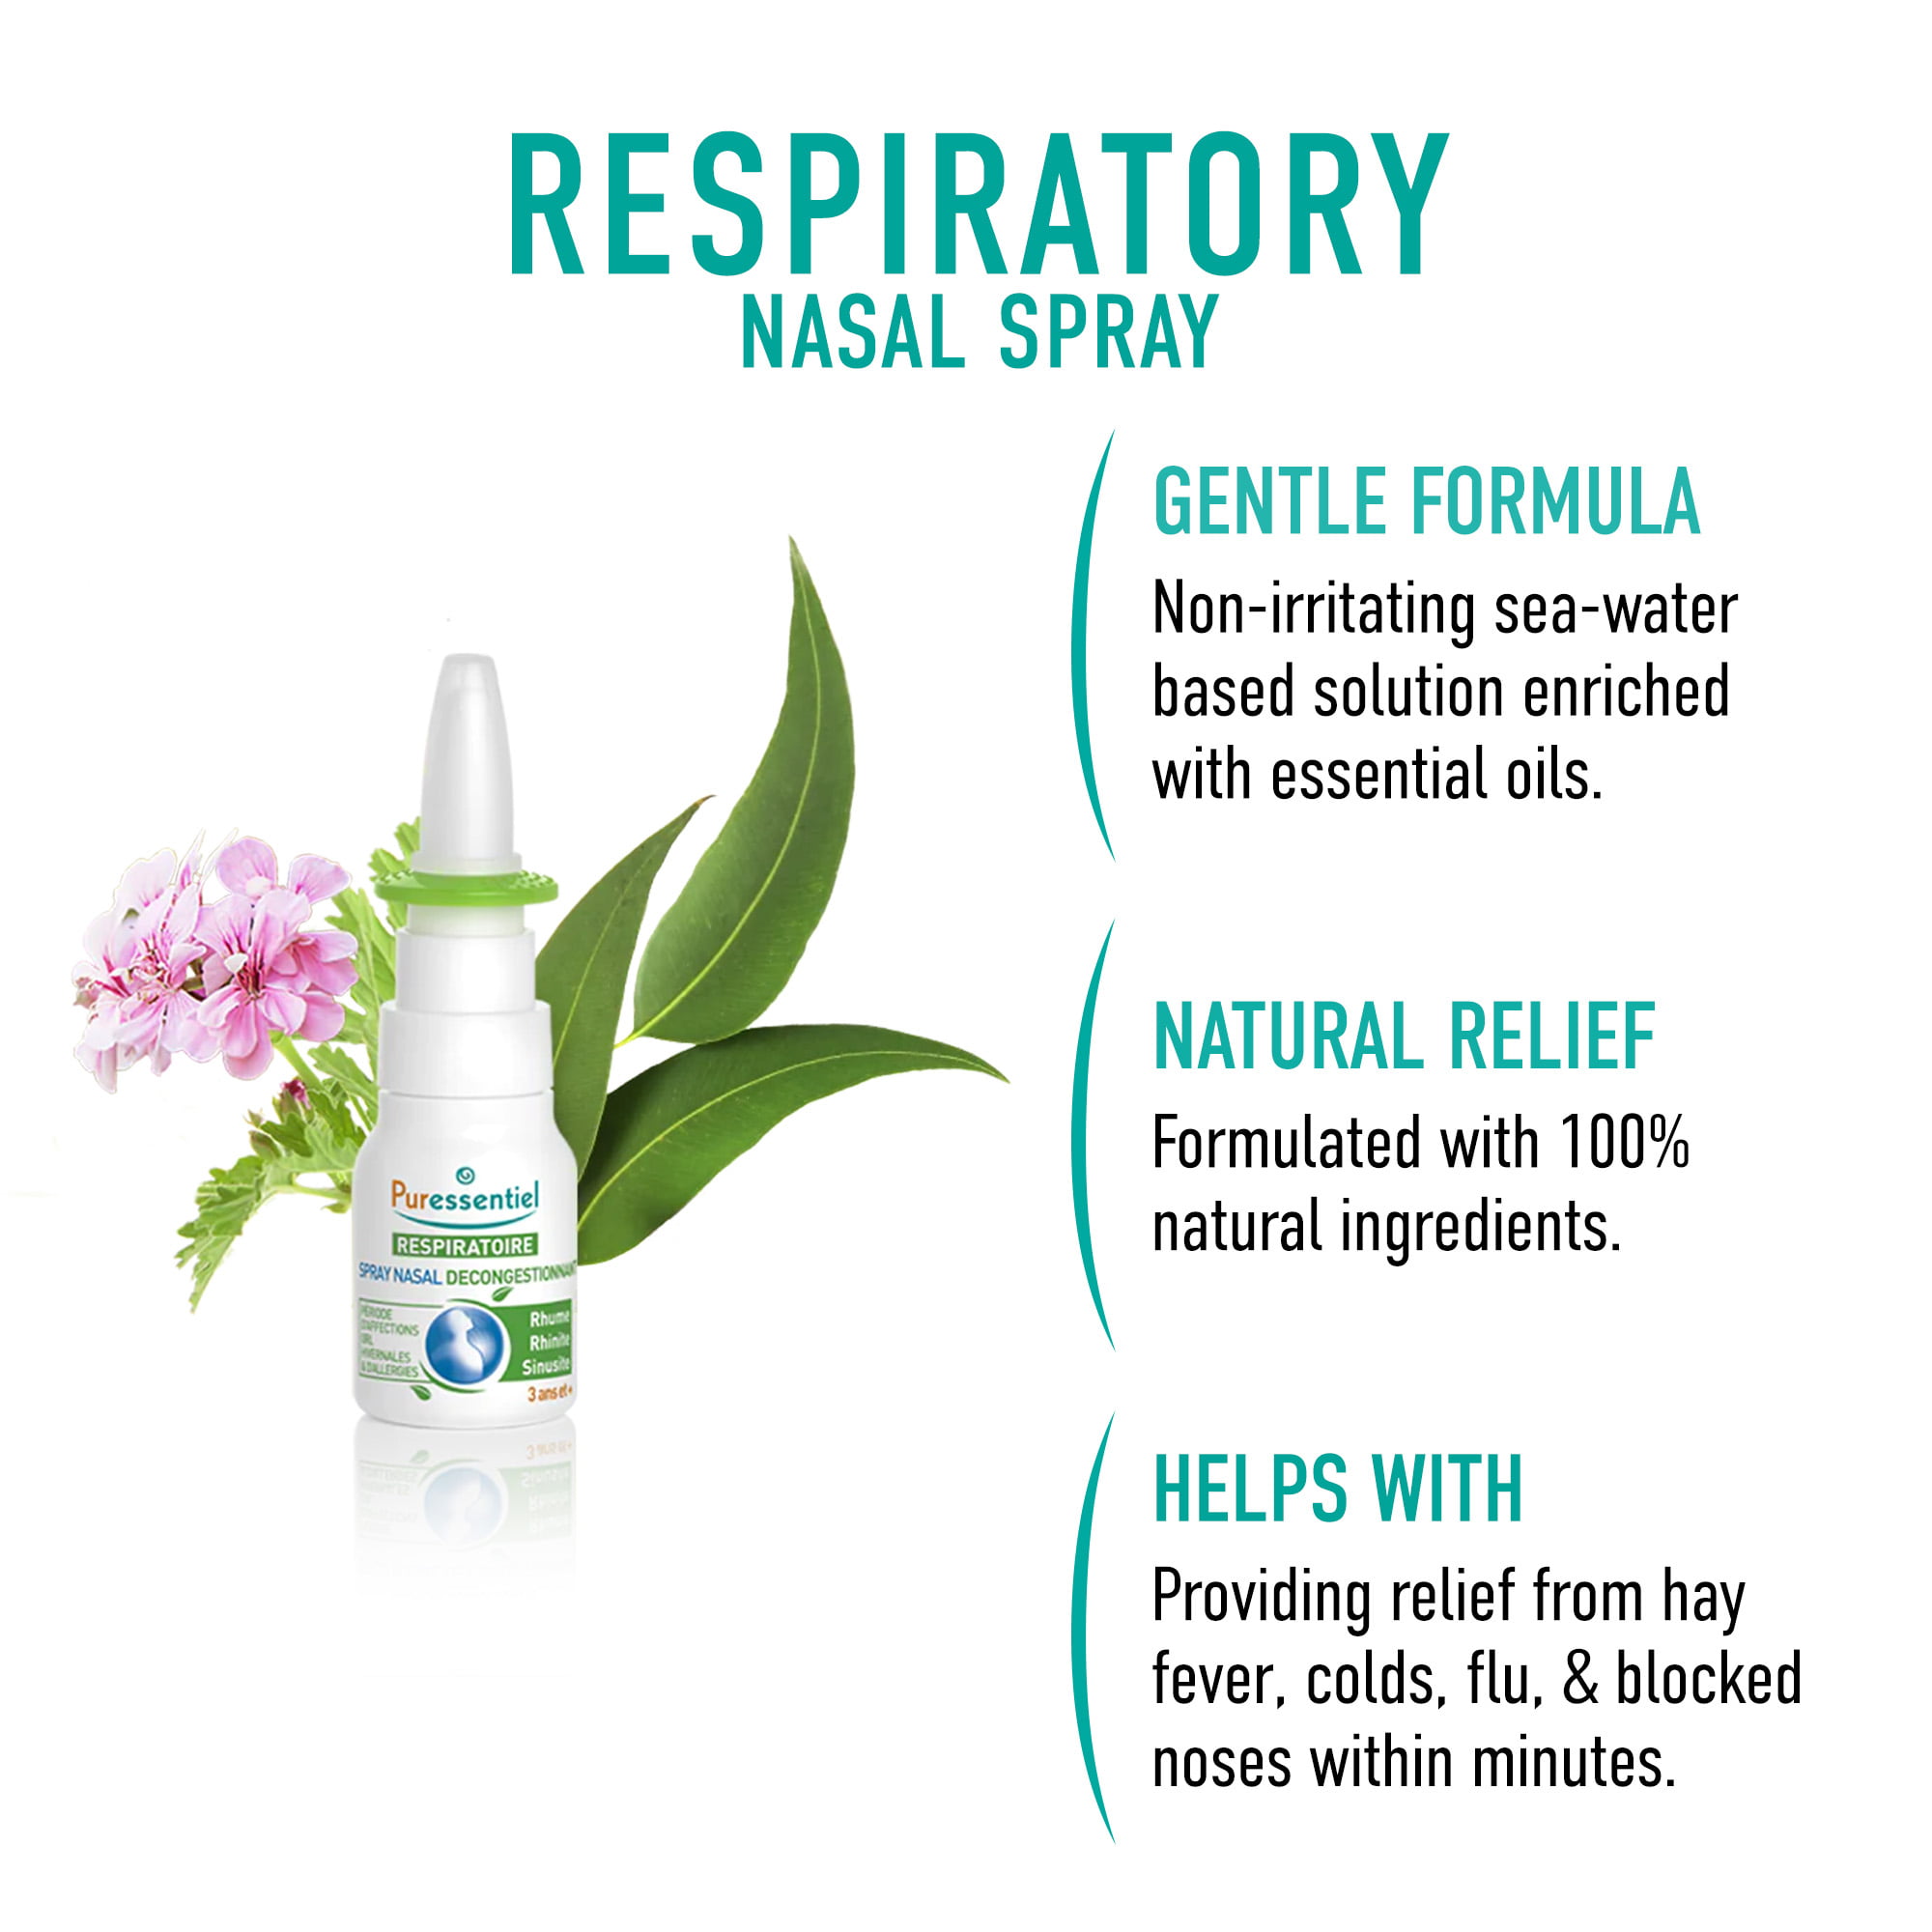 Puressentiel Respiratory Decongestant Nasal Spray, Allergy Relief, 0.51 oz